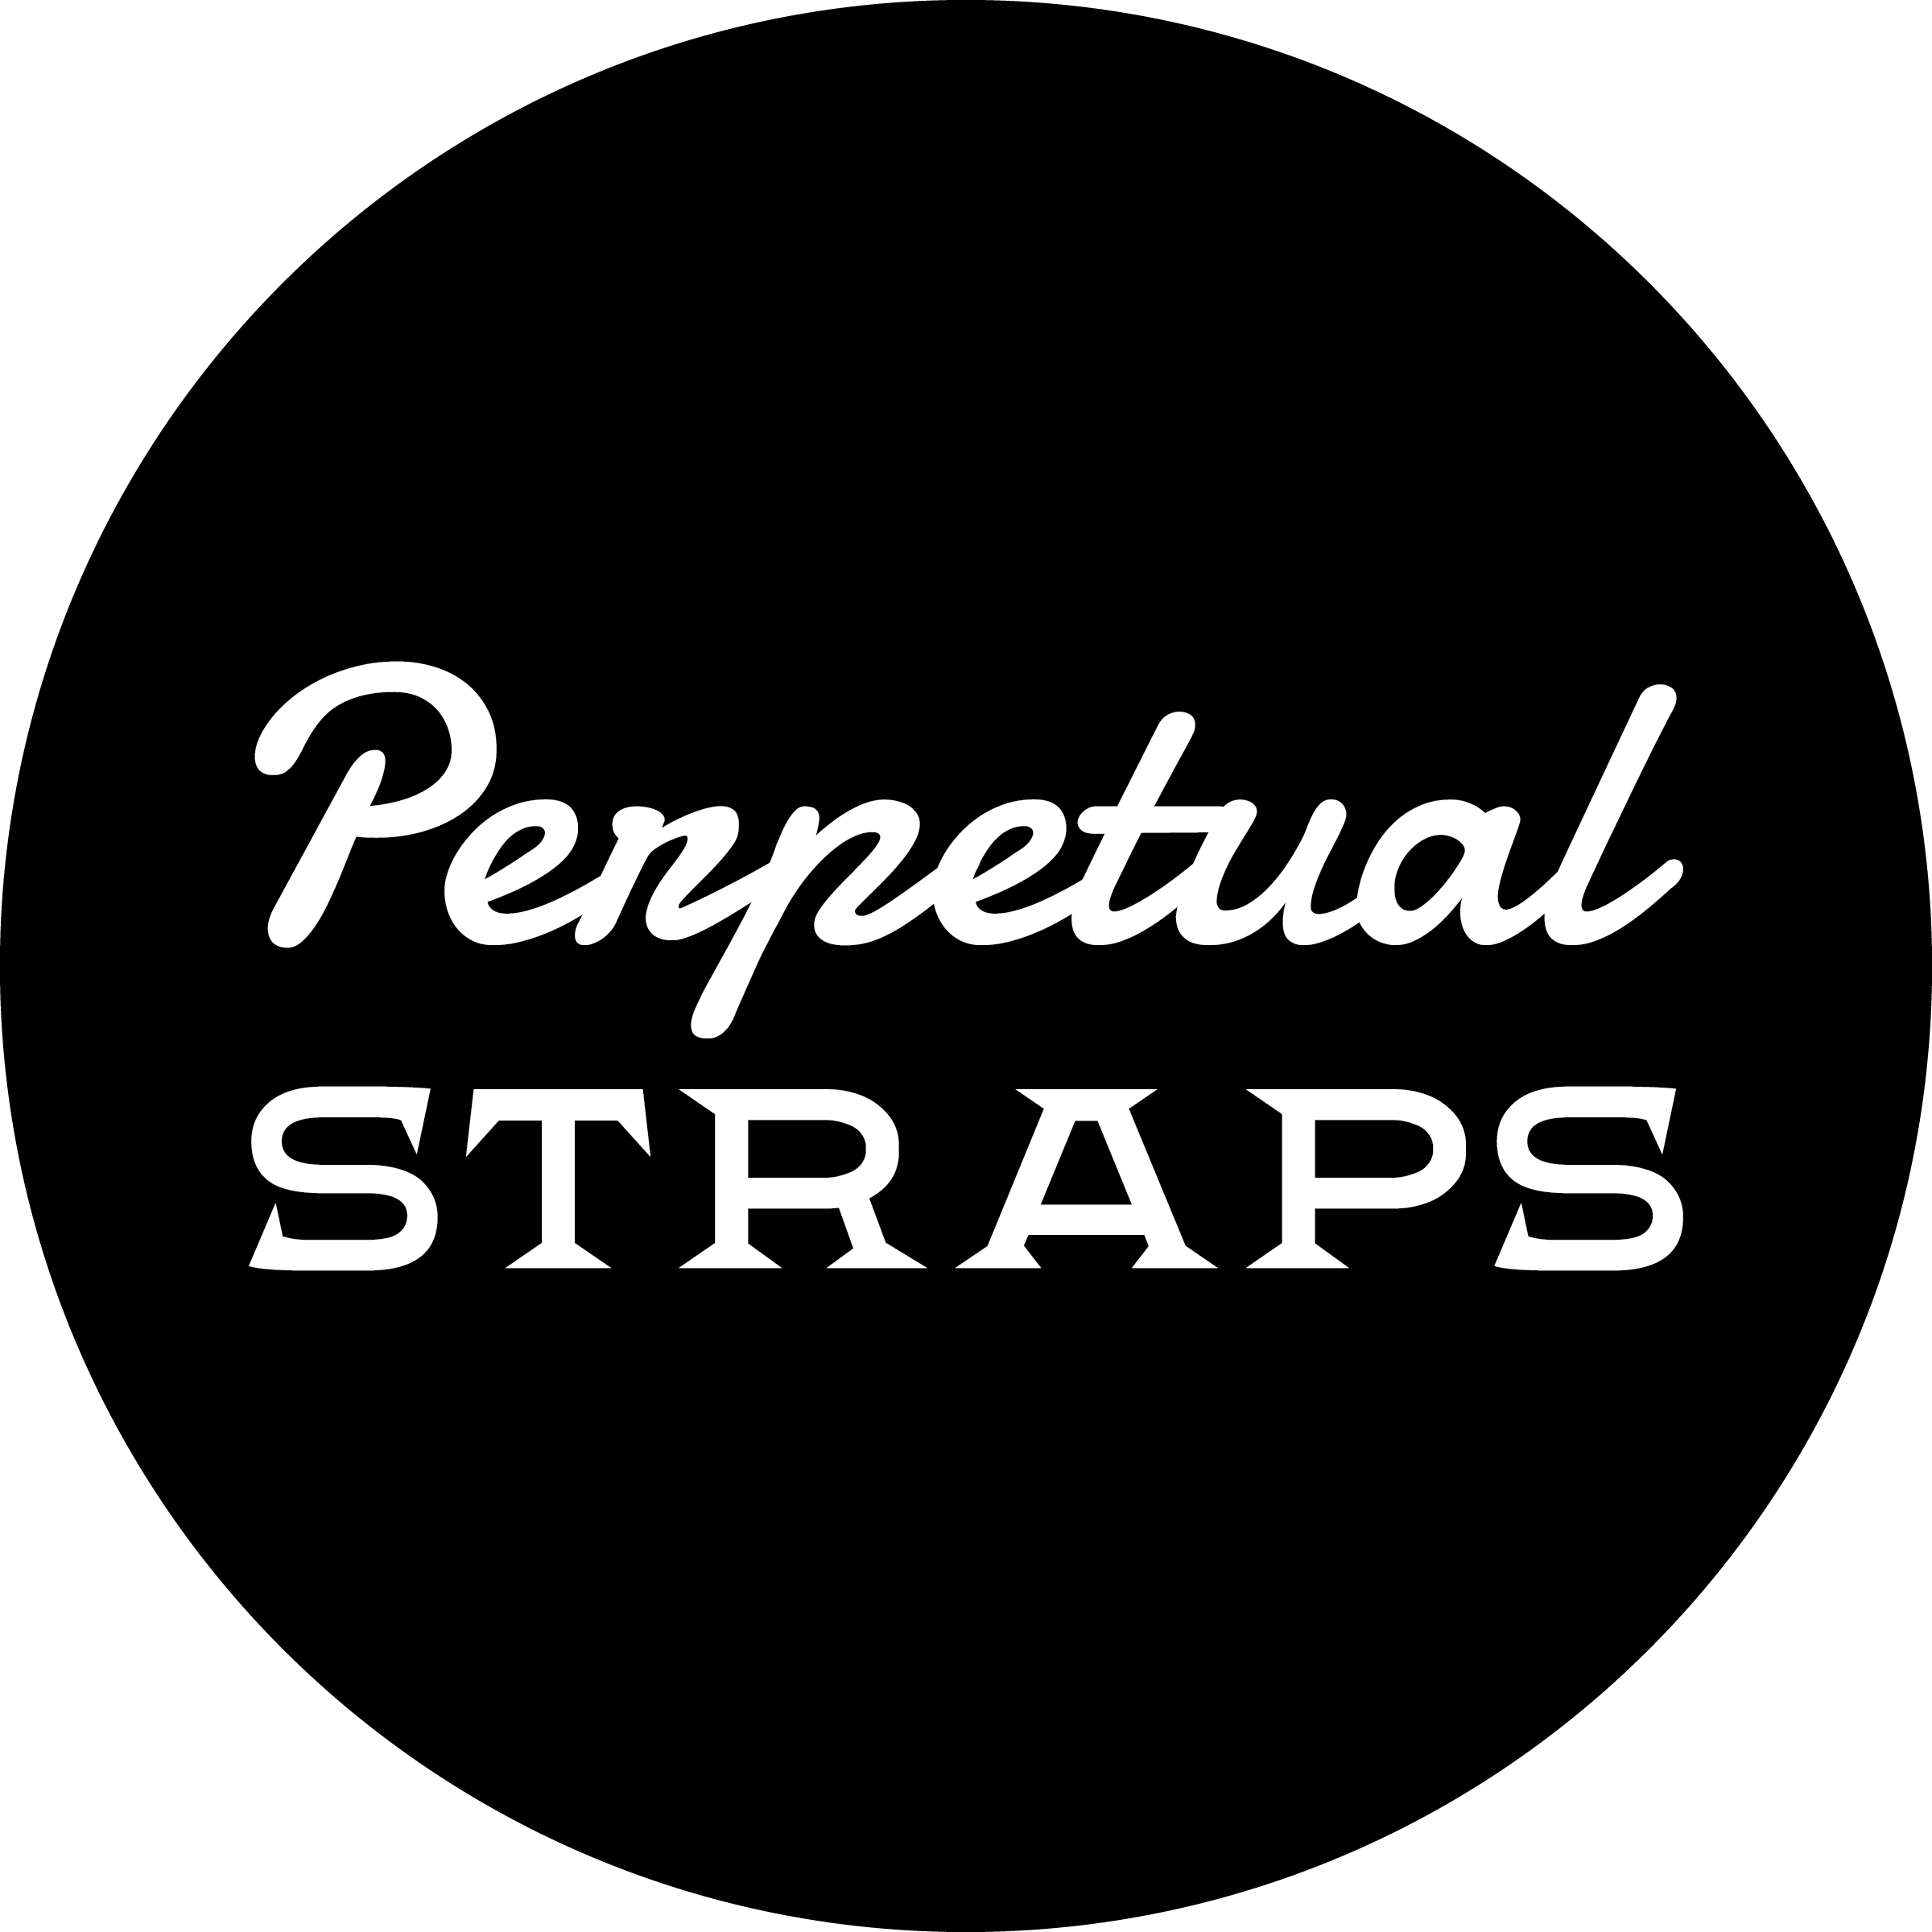 Perpetual Straps